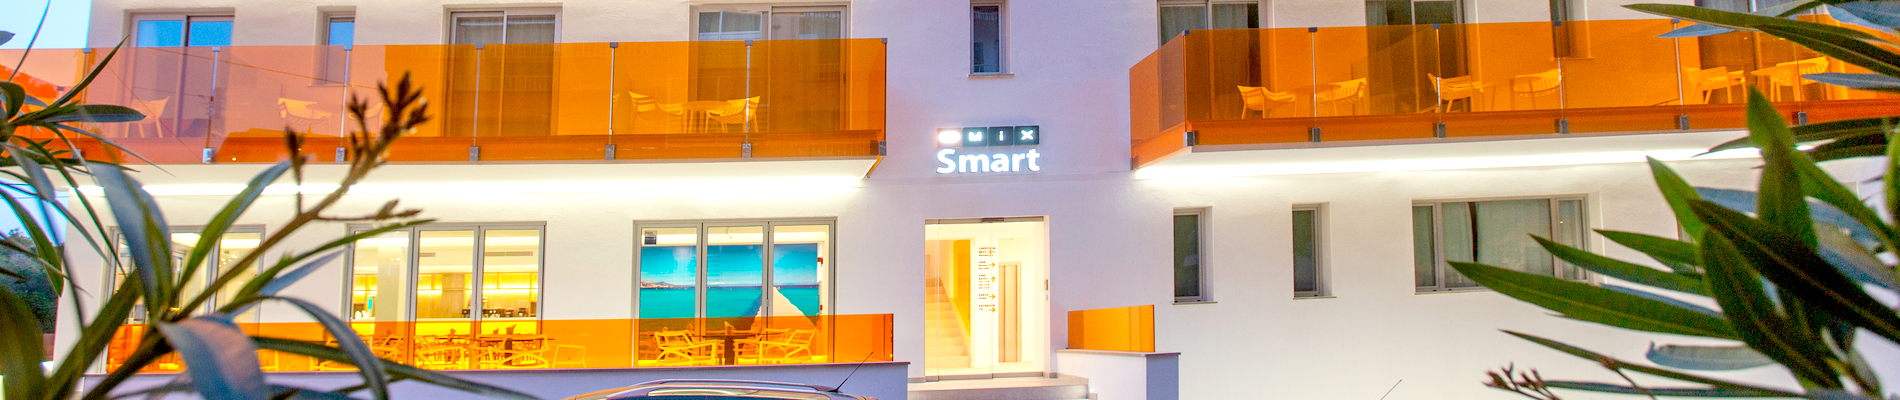 Meet the Mix Smart Hotel in Mallorca